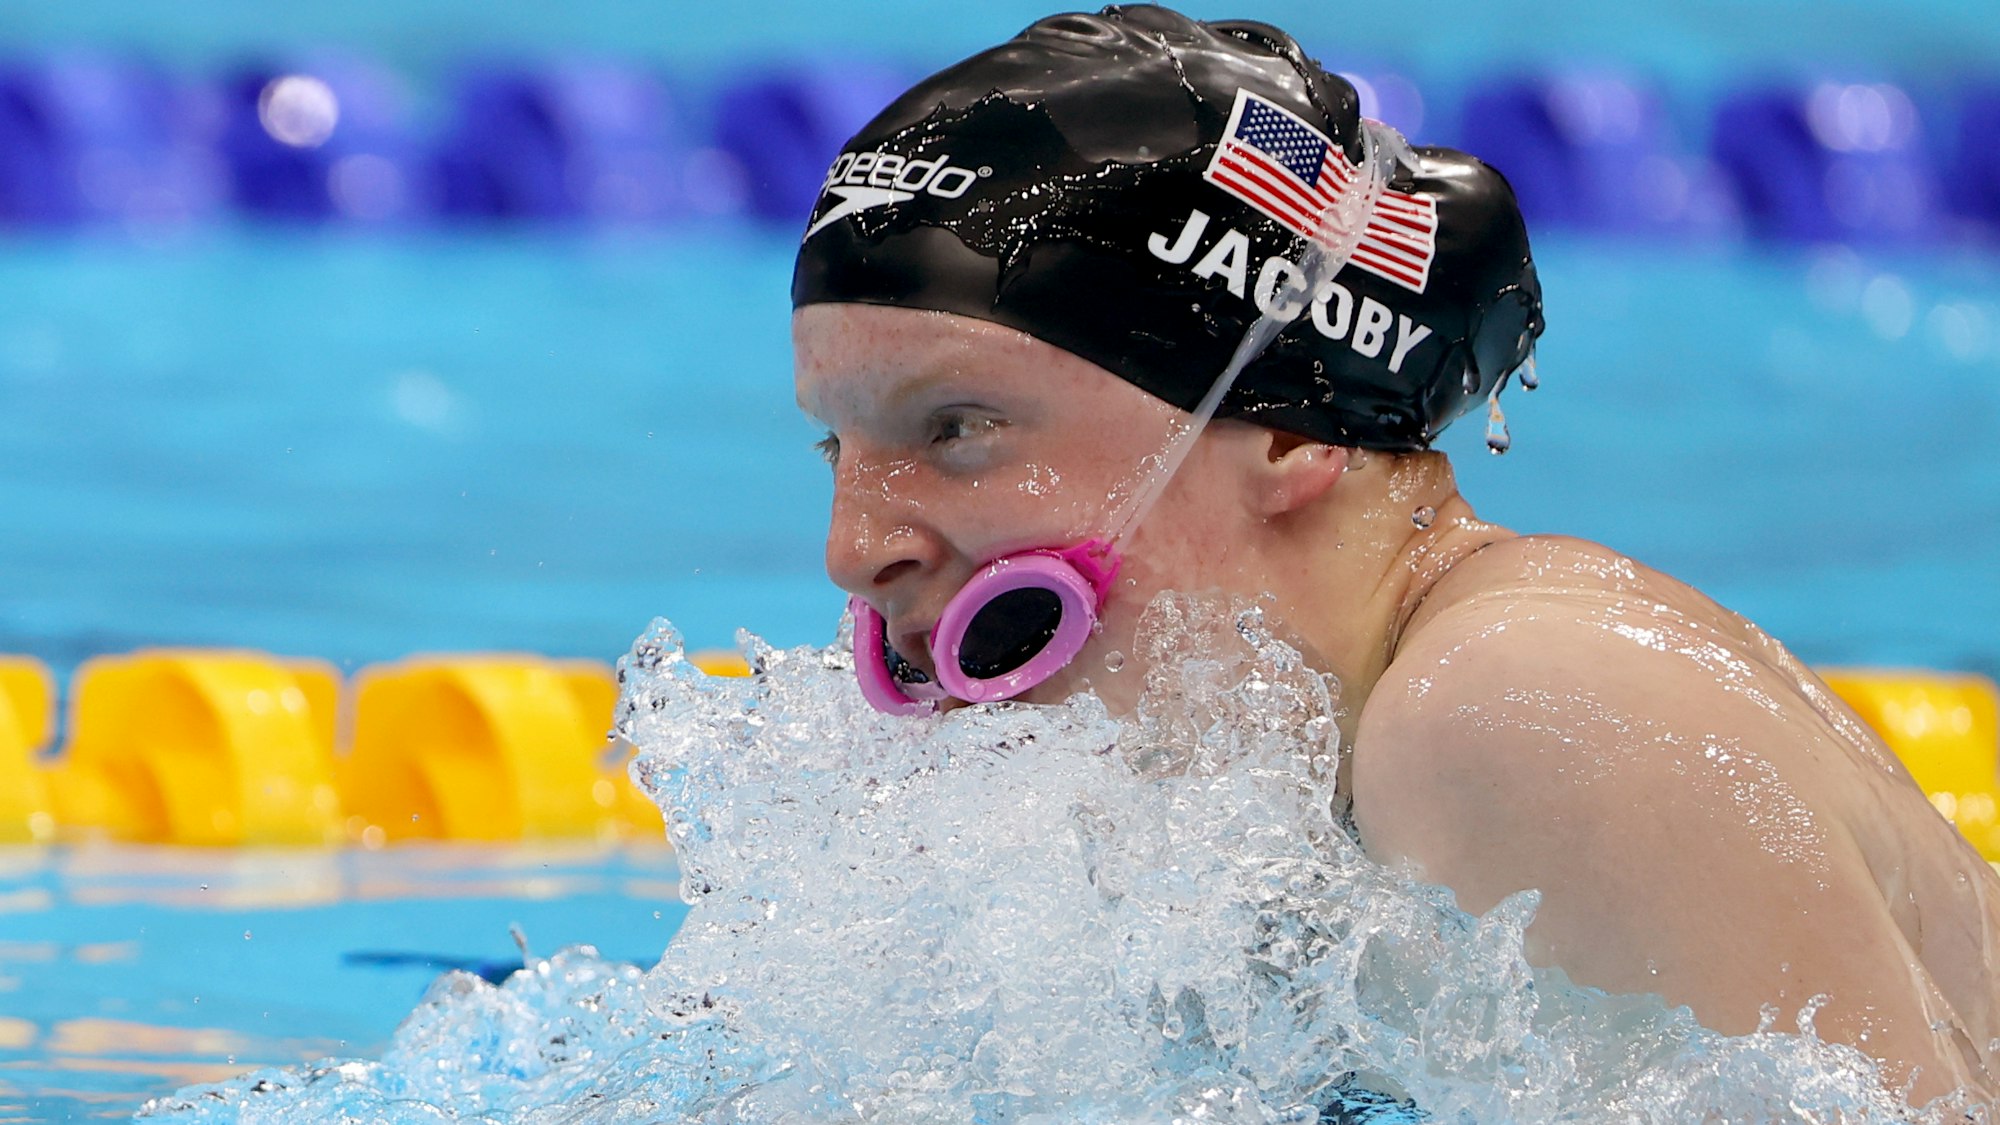 Schwimmen: Olympia, Mixed, 4 x 100 m Lagen, Finale im Tokyo Aquatics Centre. Staffel USA mit Lydia Jacoby in Aktion. +++ dpa-Bildfunk +++